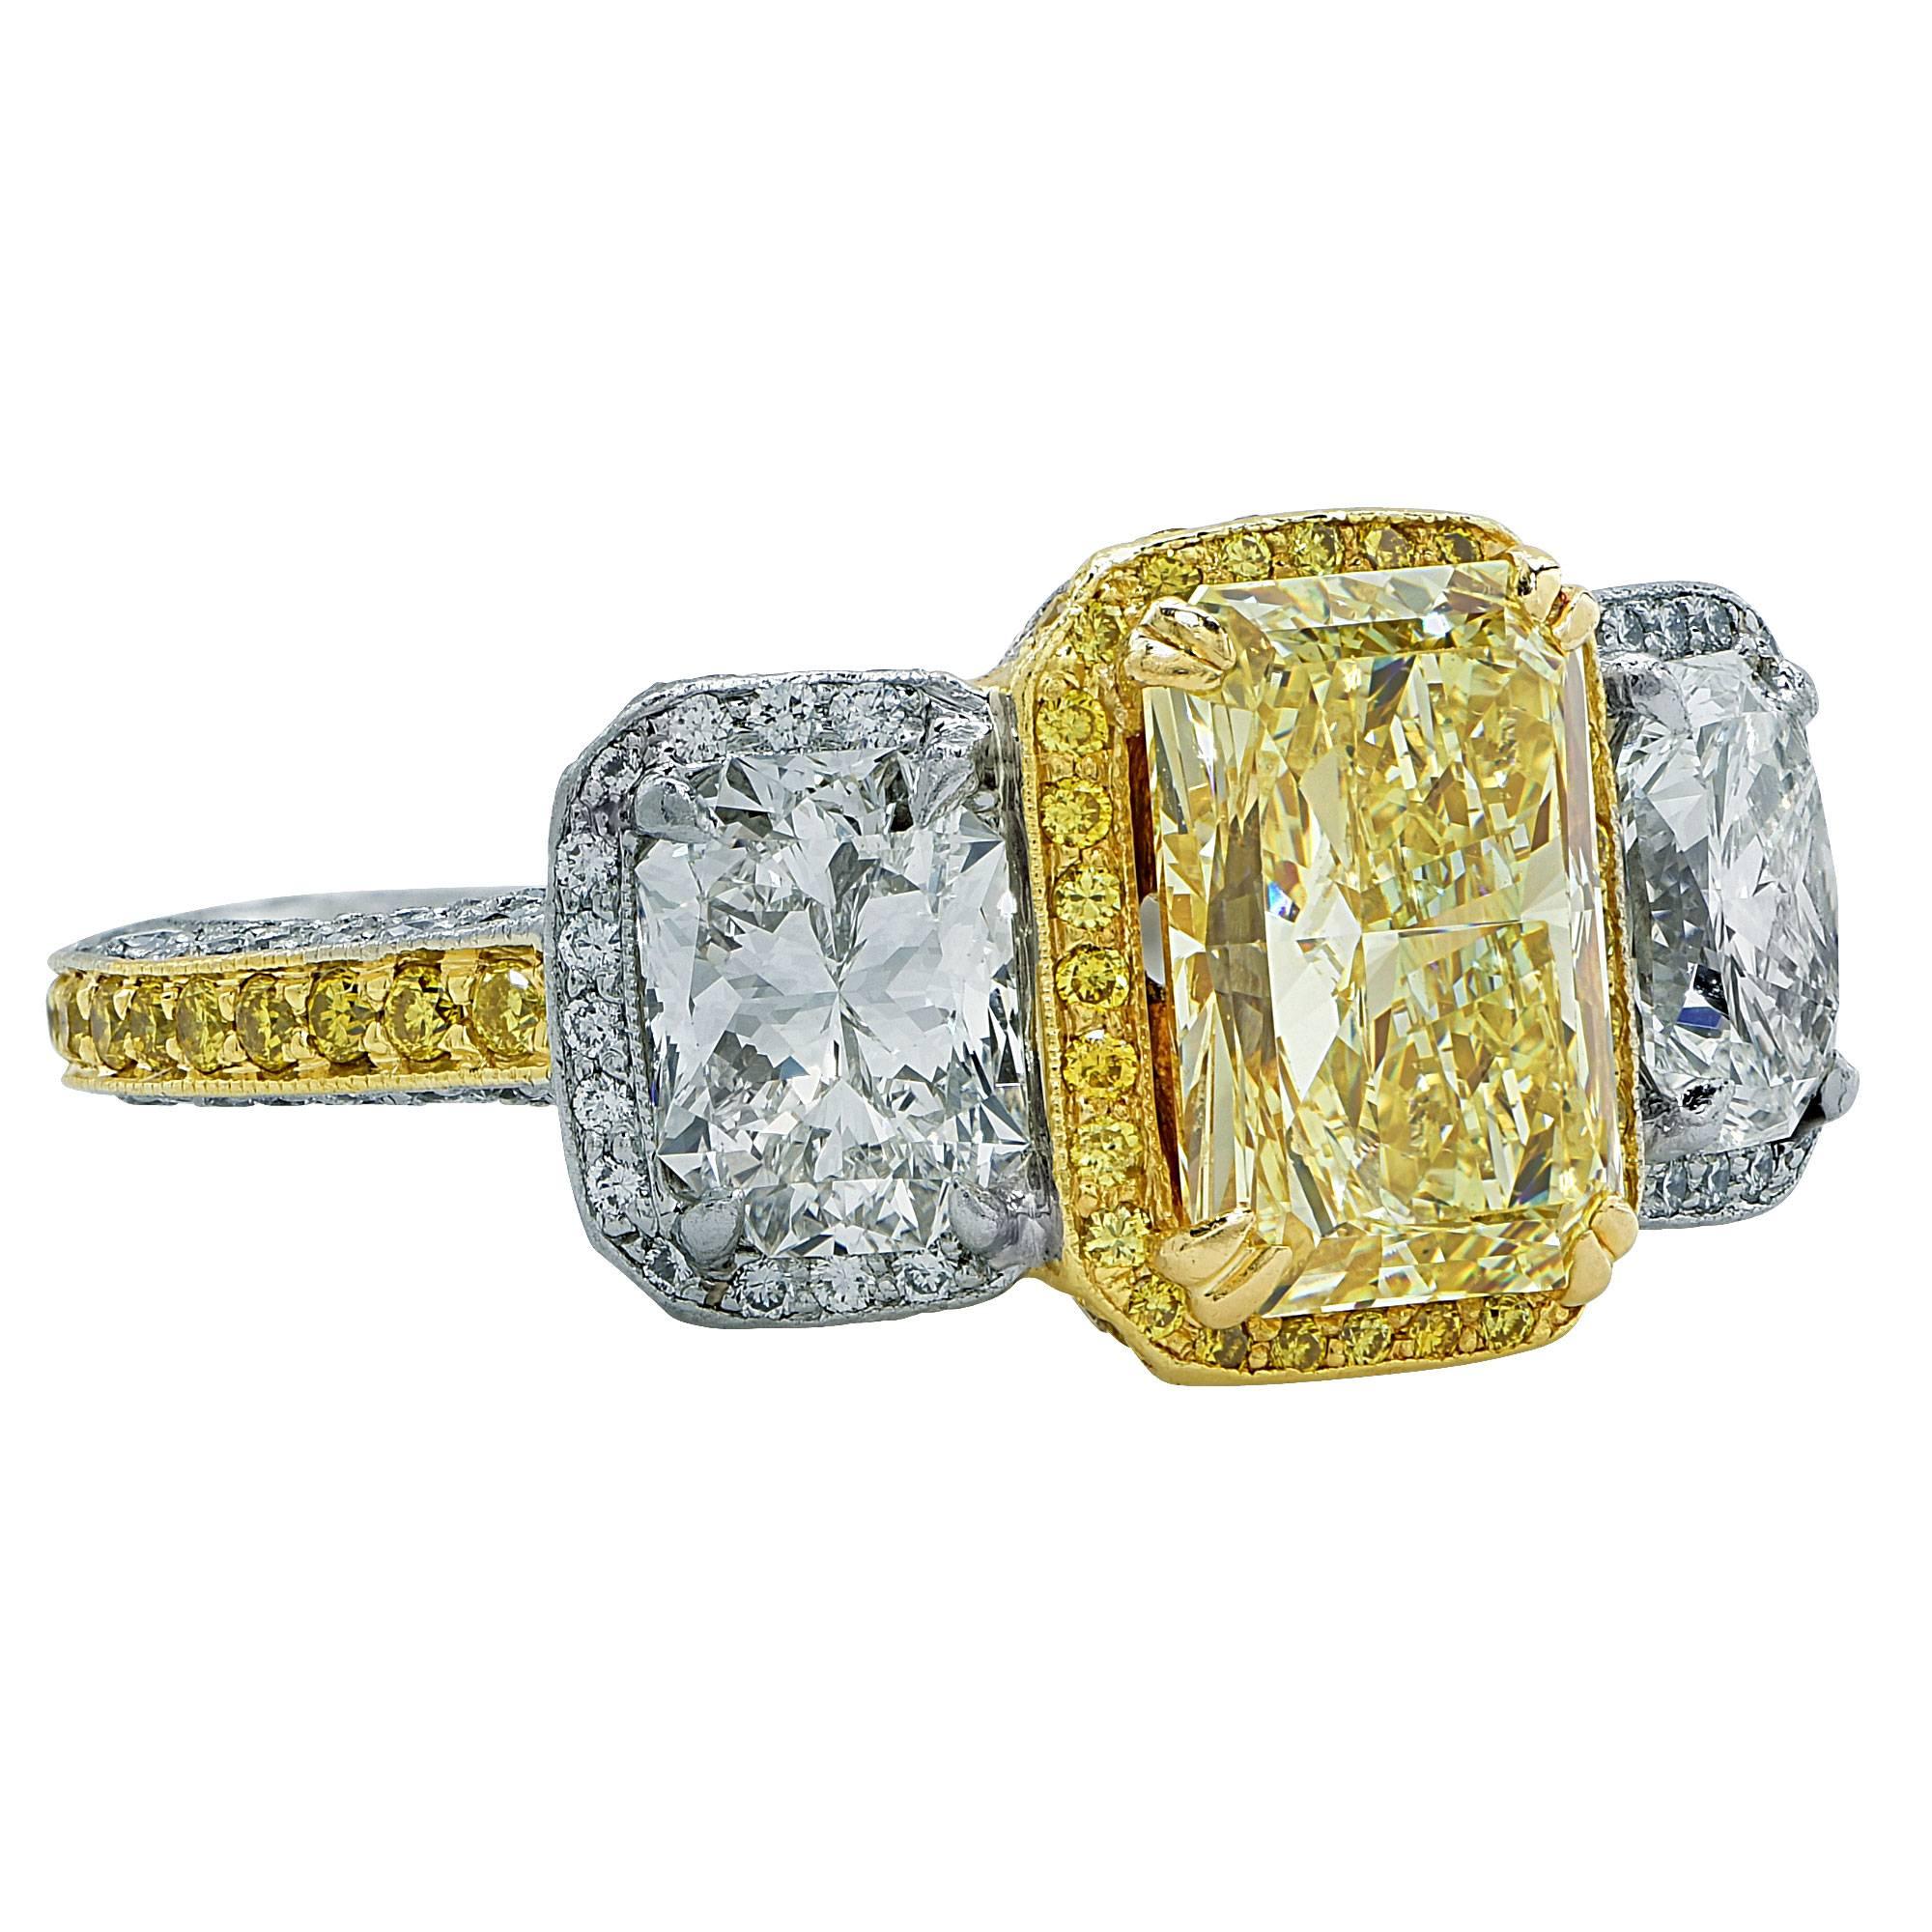 48 carat diamond ring